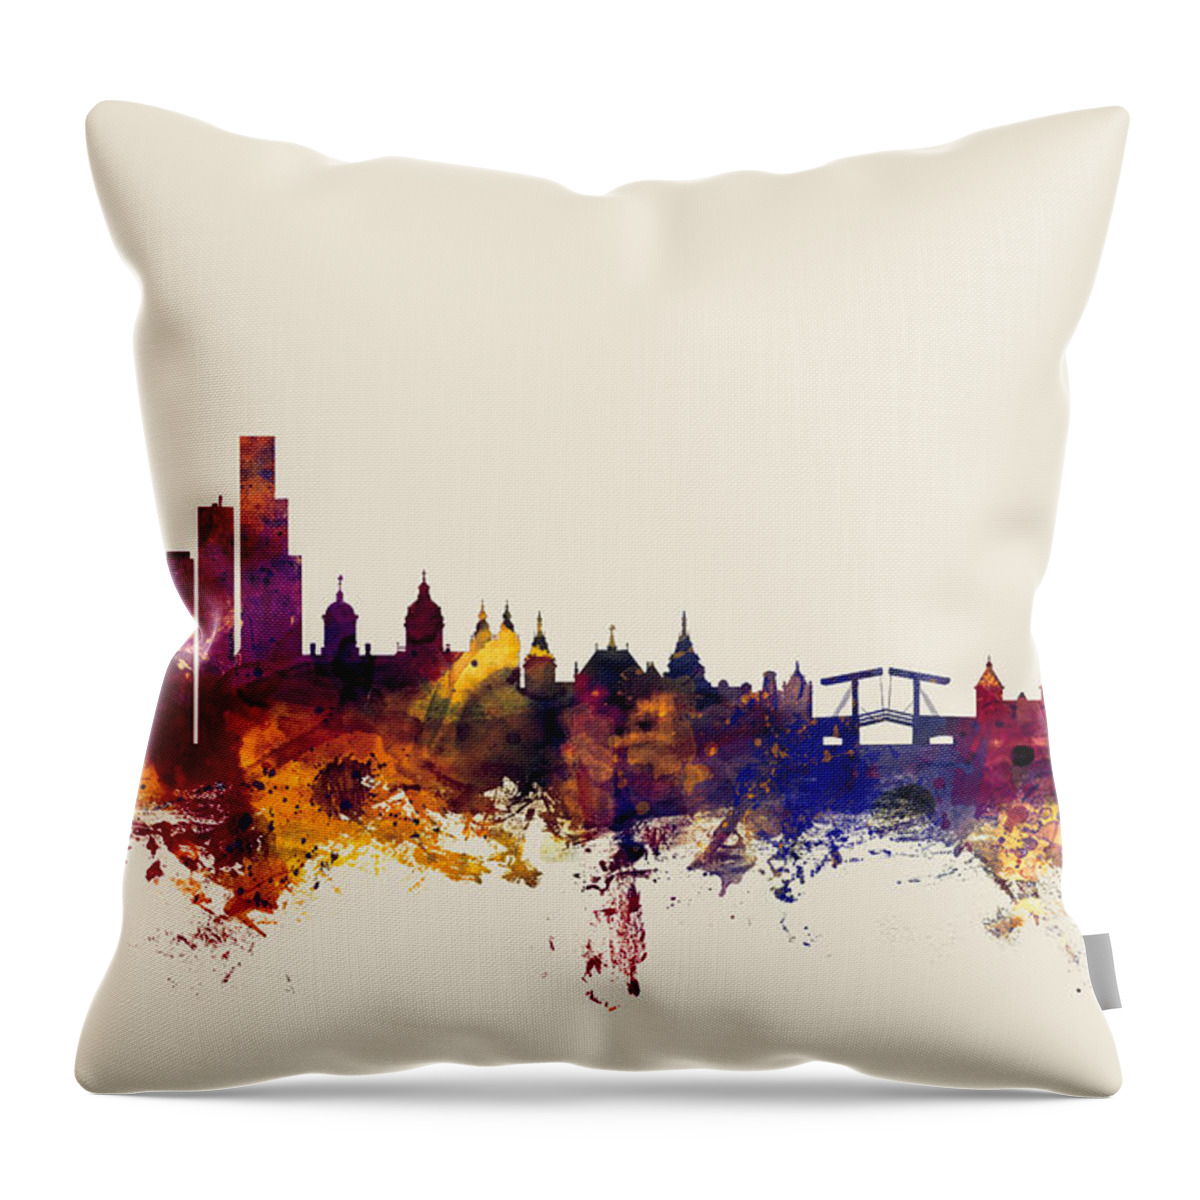 Amsterdam Throw Pillow featuring the digital art Amsterdam The Netherlands Skyline by Michael Tompsett